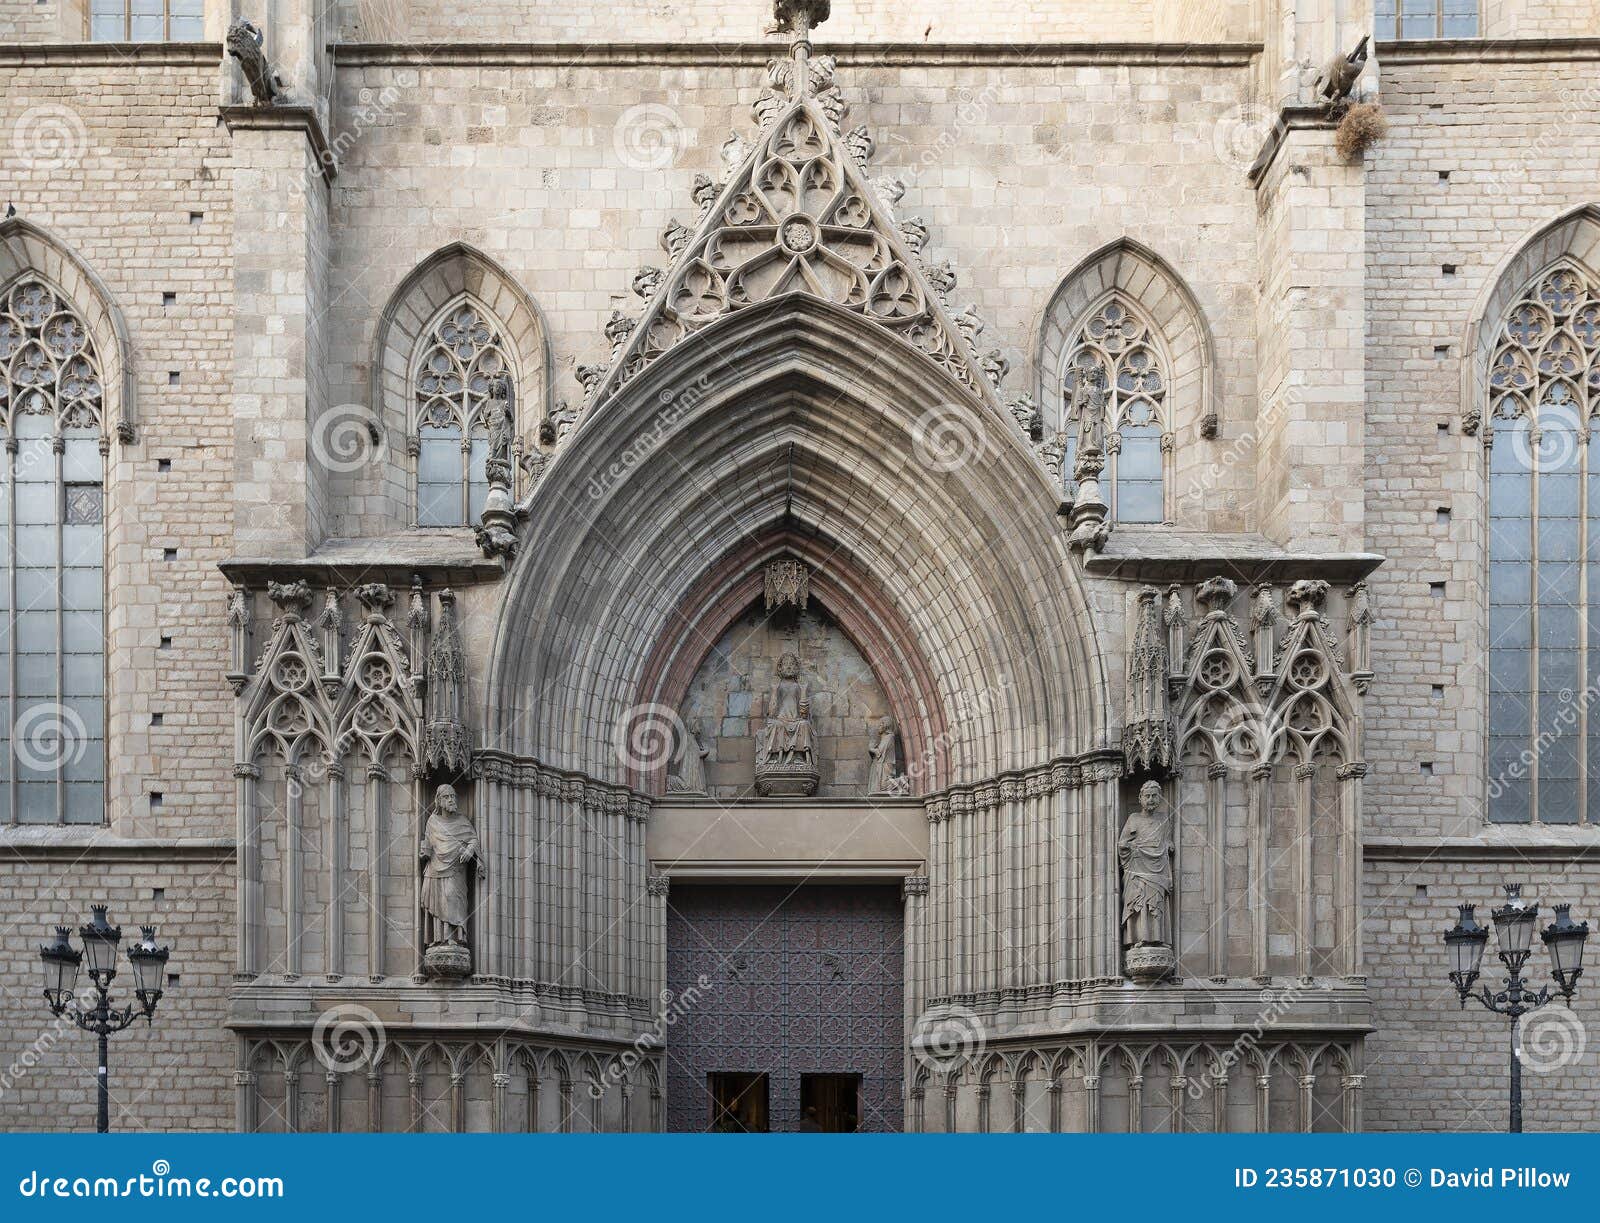 the west entrance to the basilica de santa maria del mar in the ribera district of barcelona, spain.